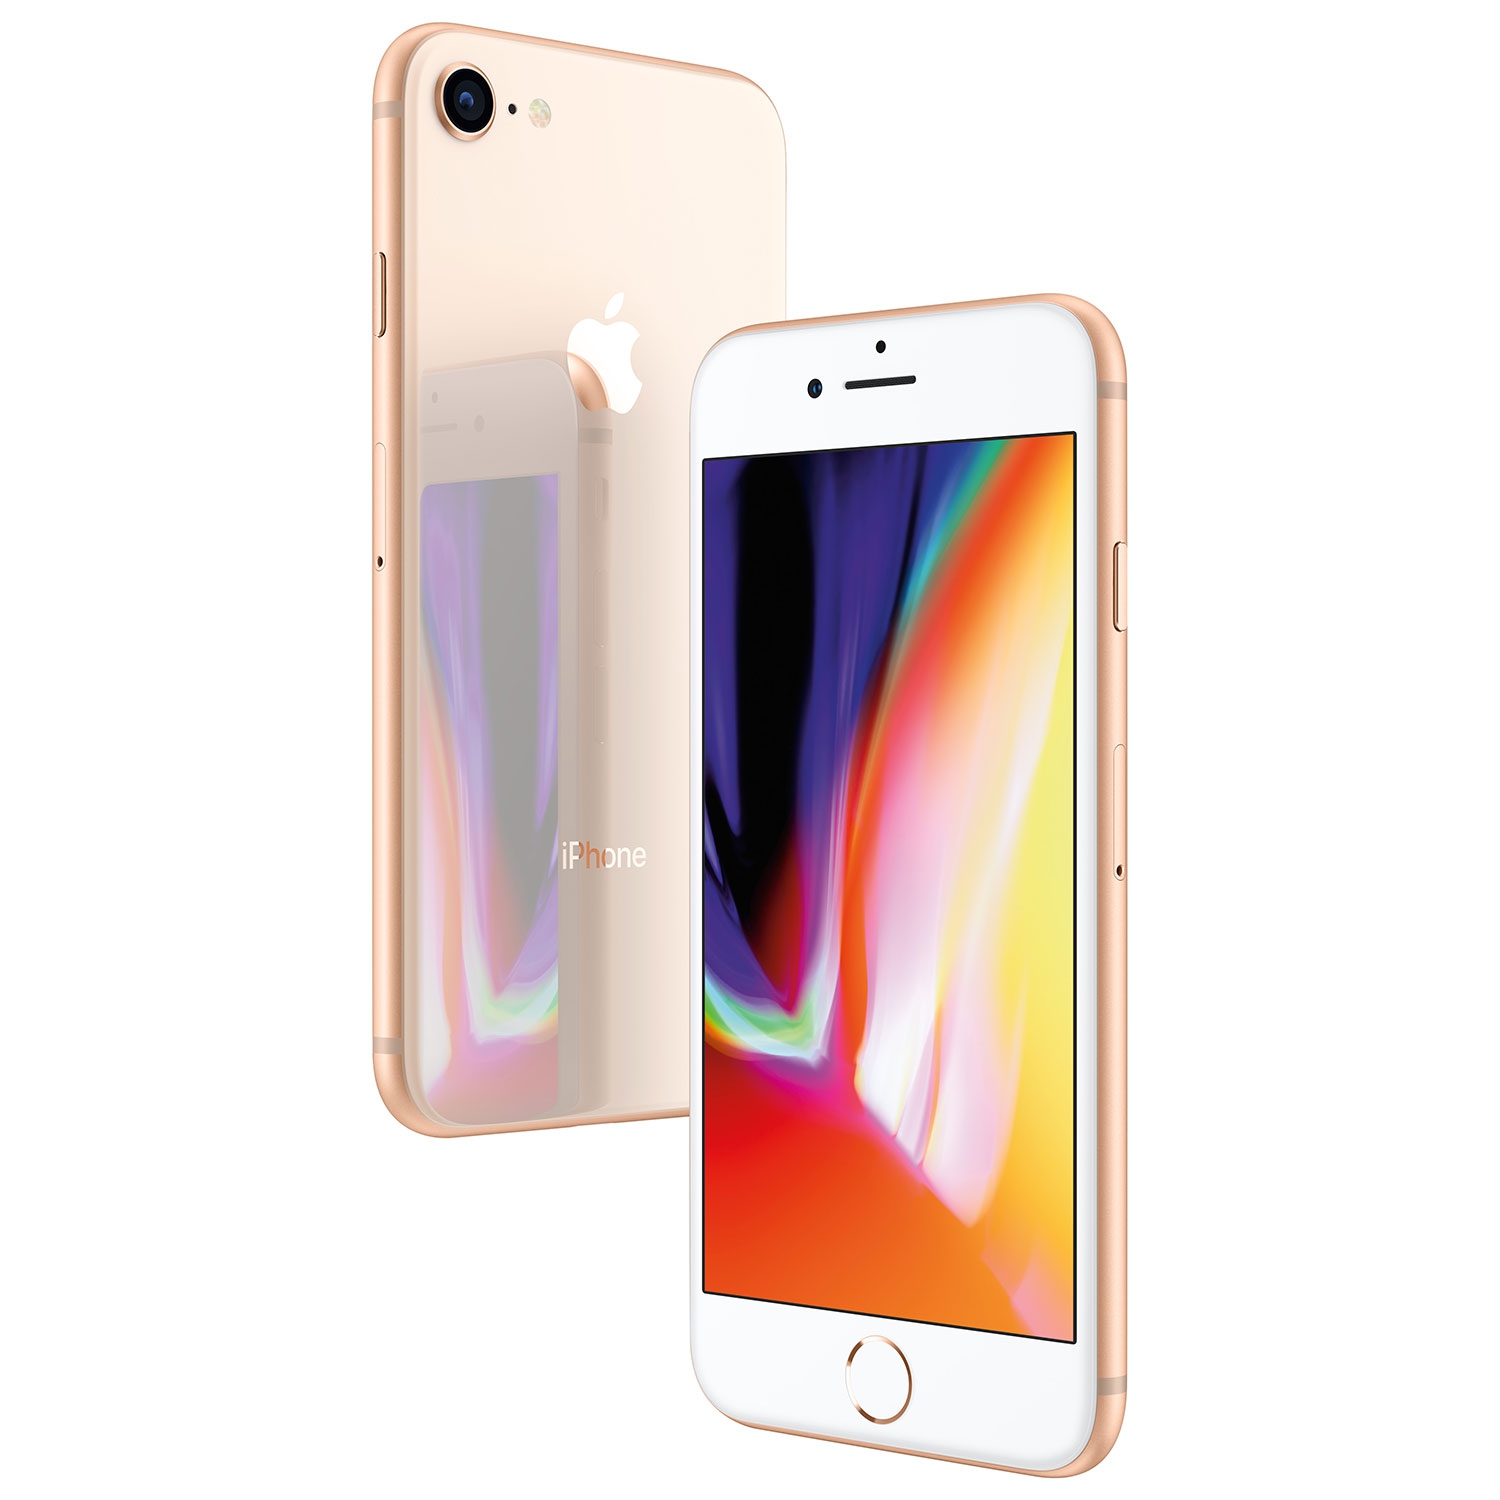 Refurbished (Excellent) - Apple iPhone 8 256GB Smartphone - Gold - Unlocked - Certified Refurbished